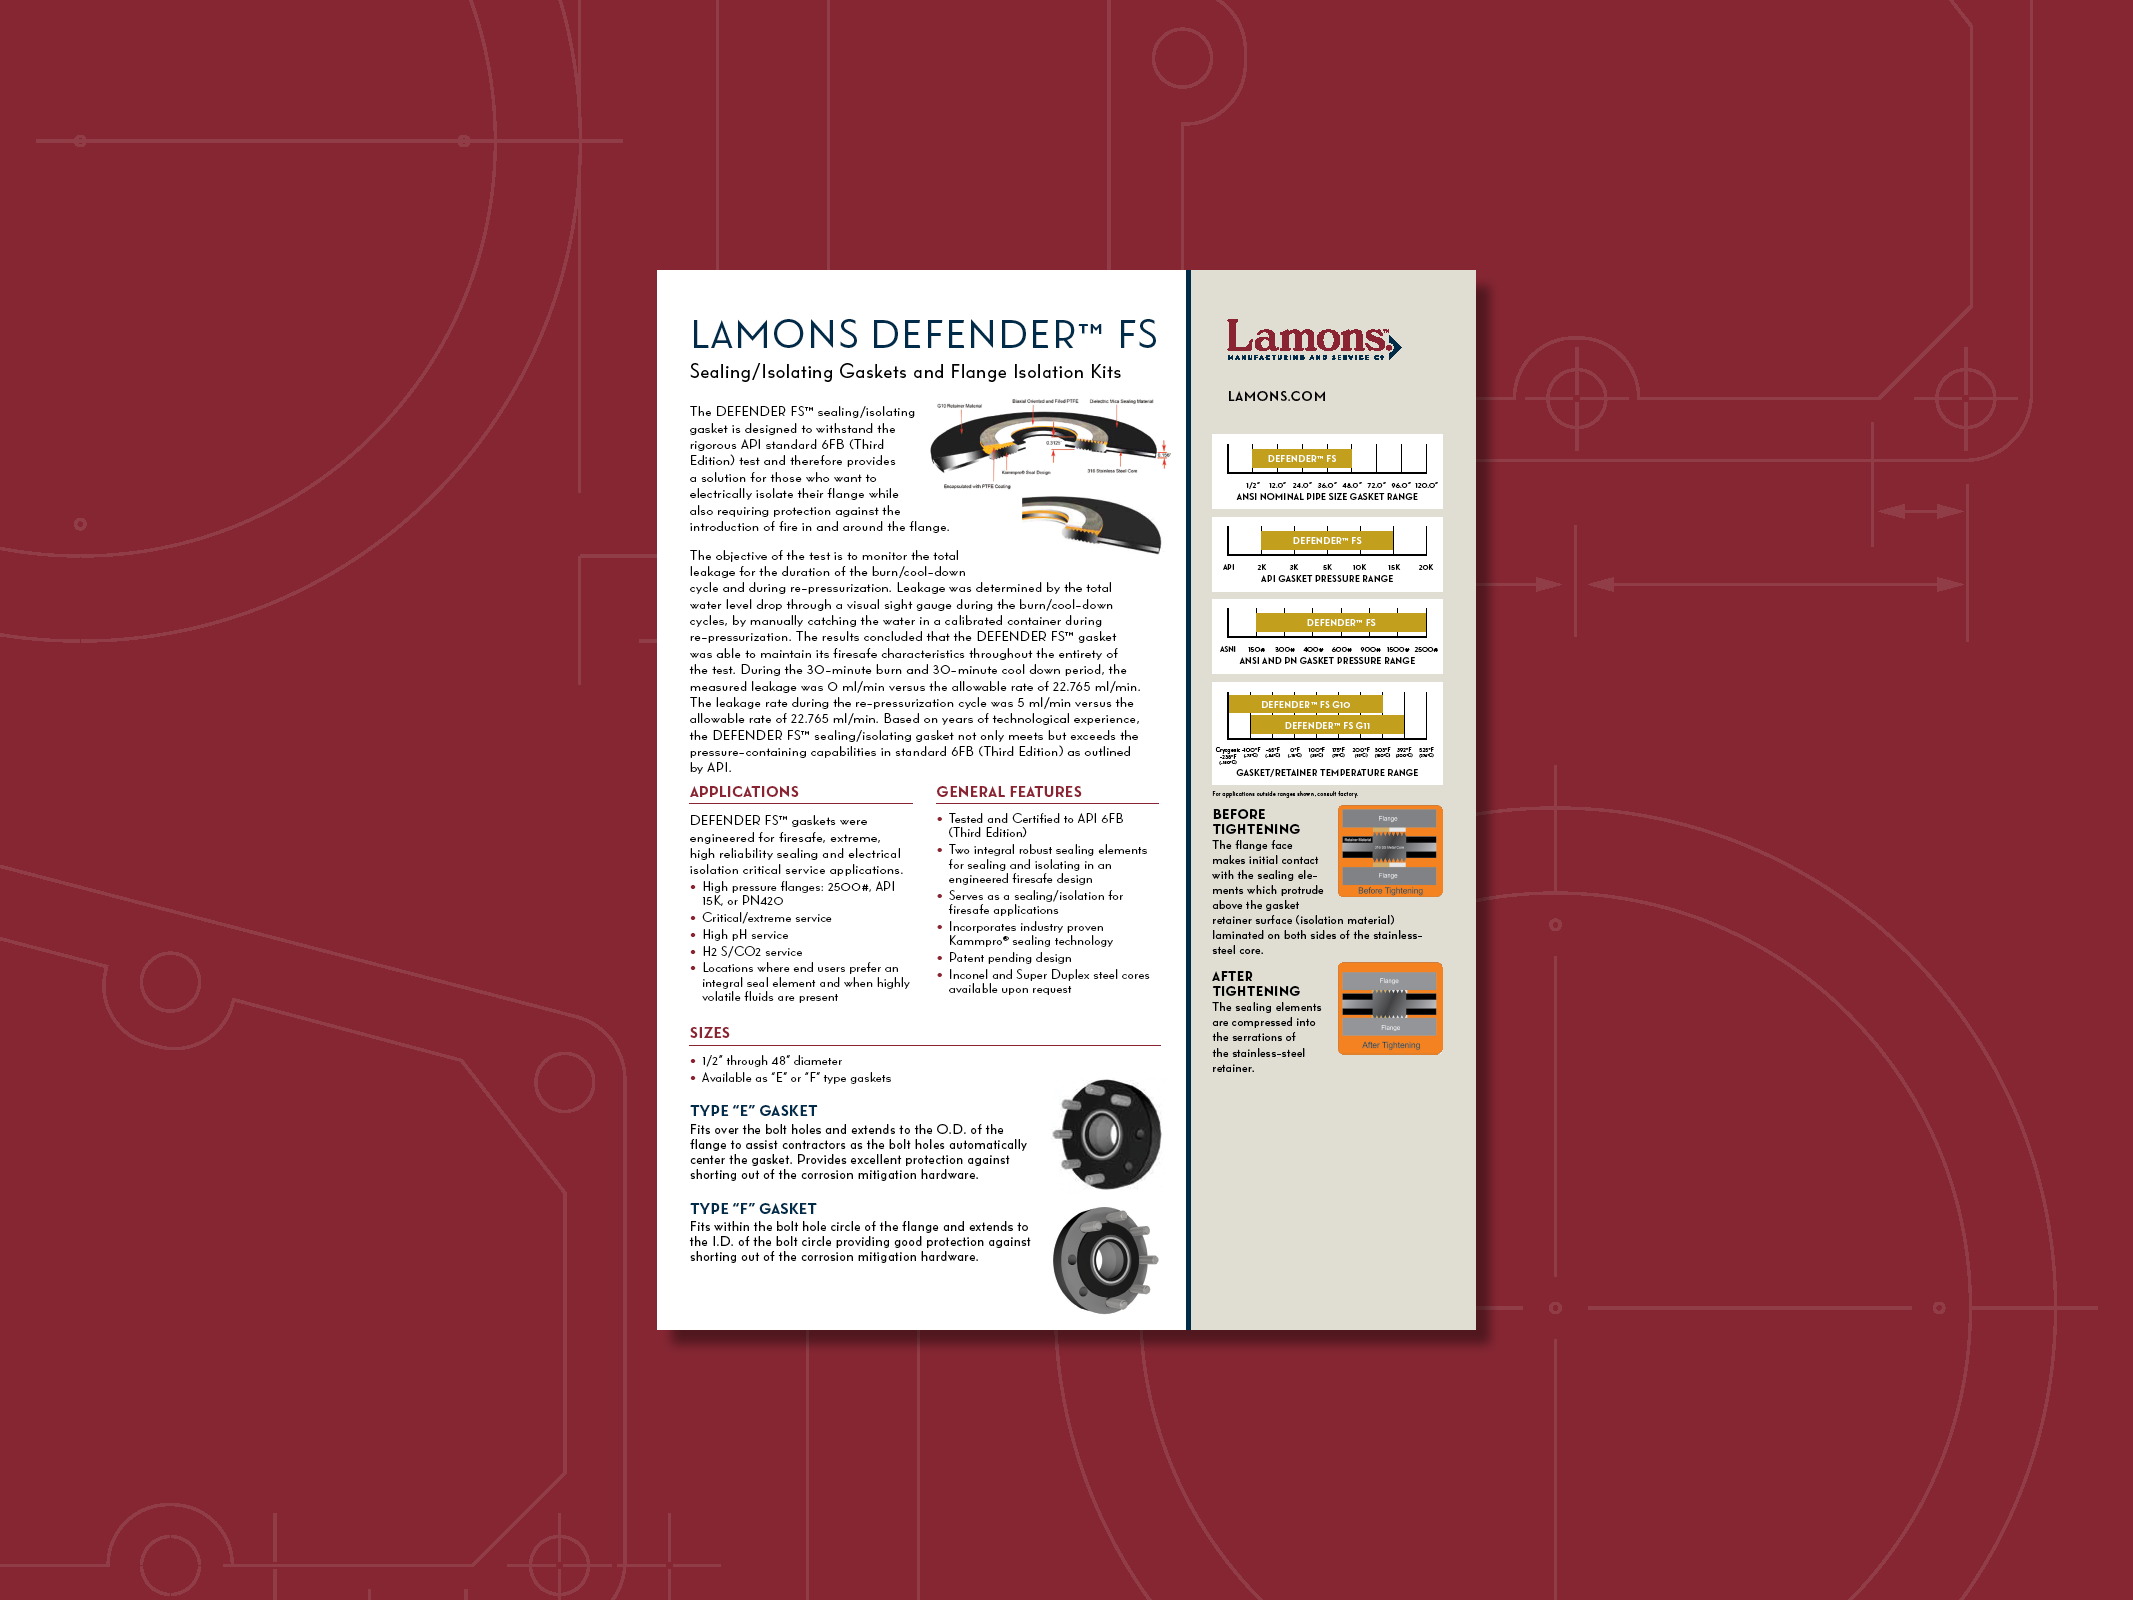 Lamons Defender FS product sheet